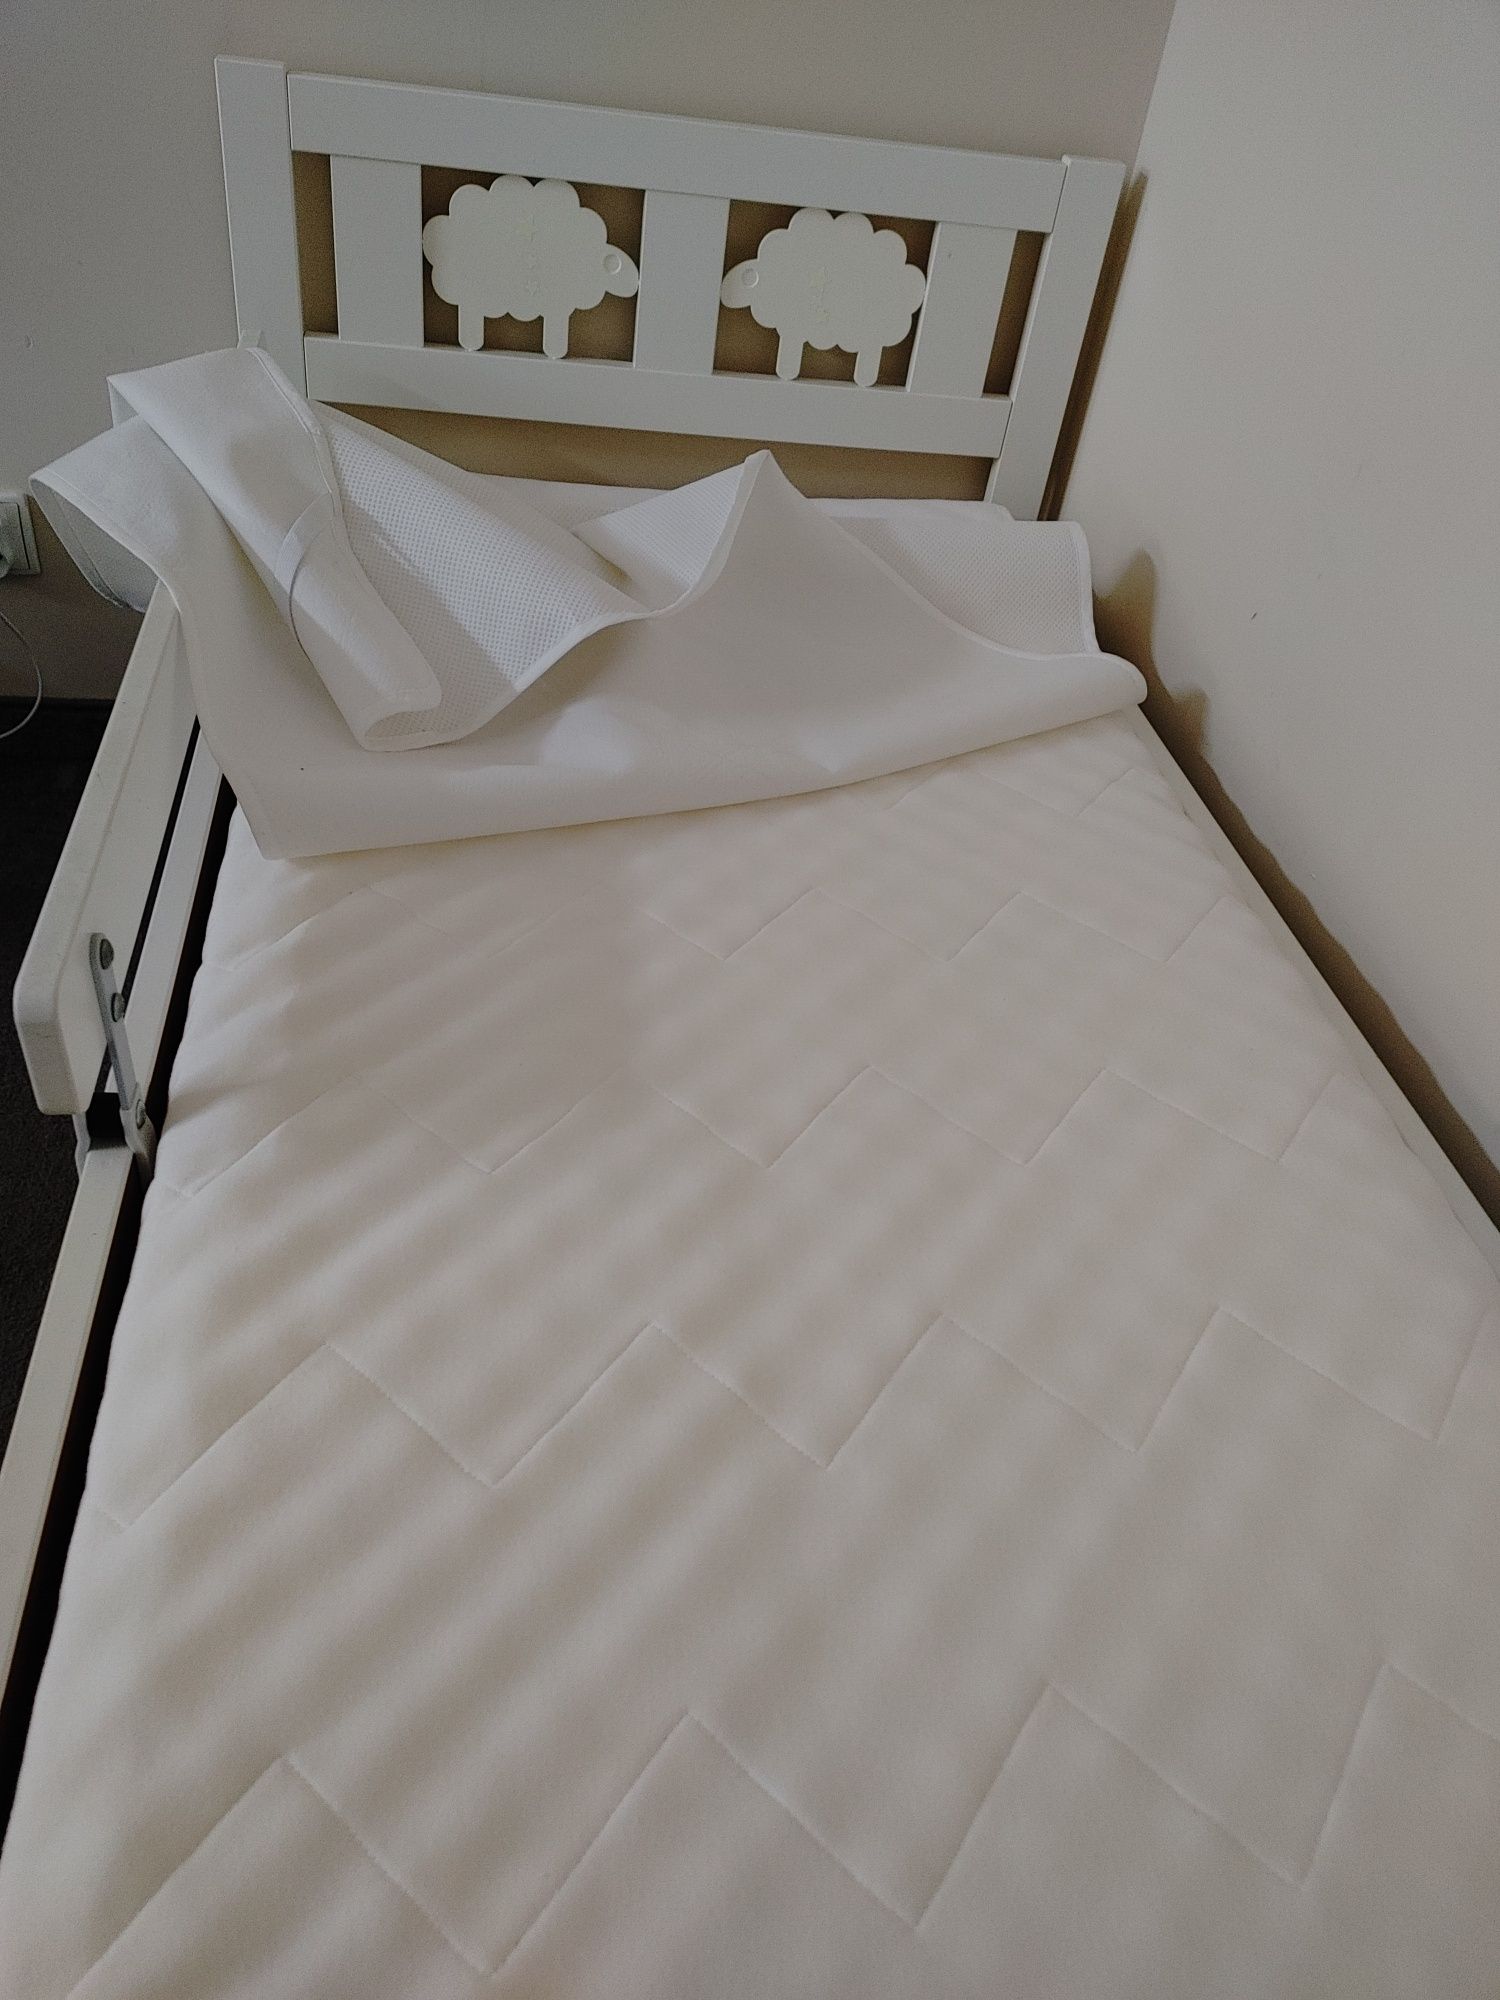 Ikea Kritter Lenast Underlig łóżko materac ochraniacz